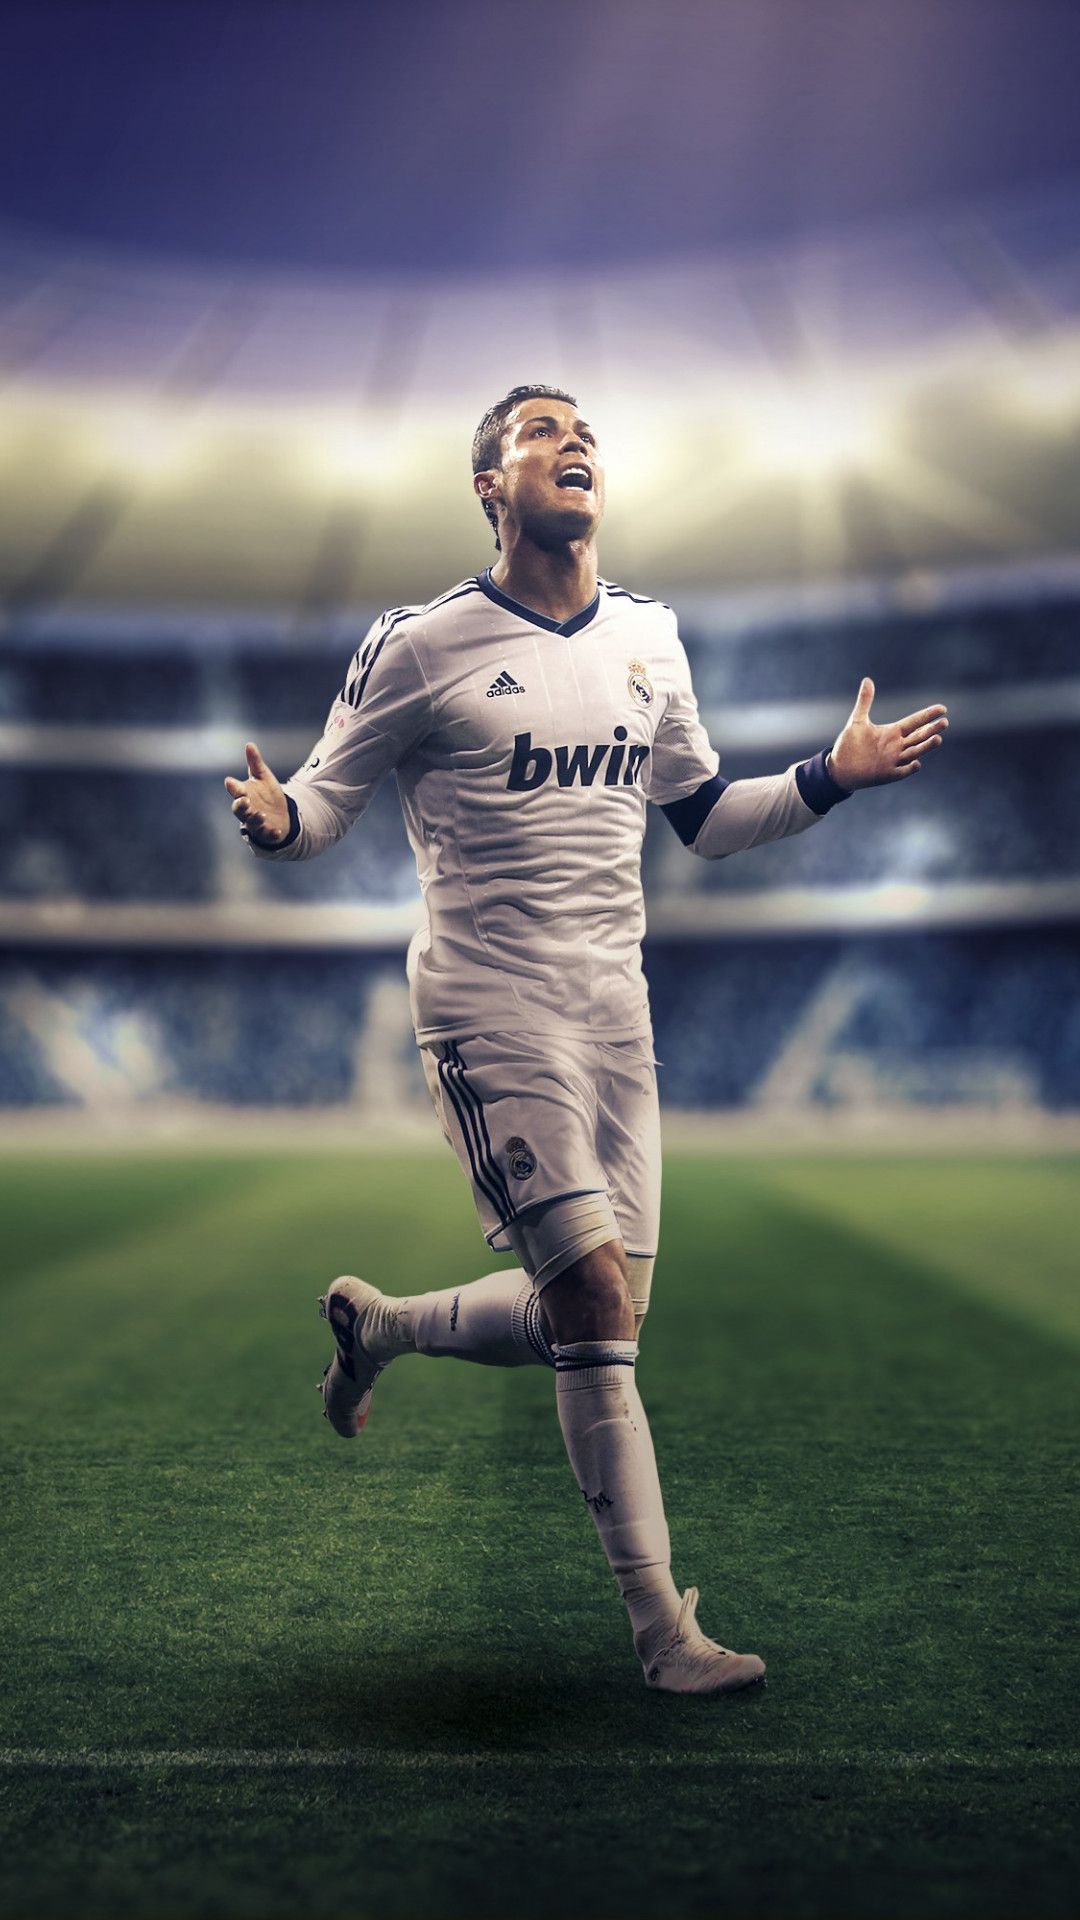 Wallpaper Of Real Madrid